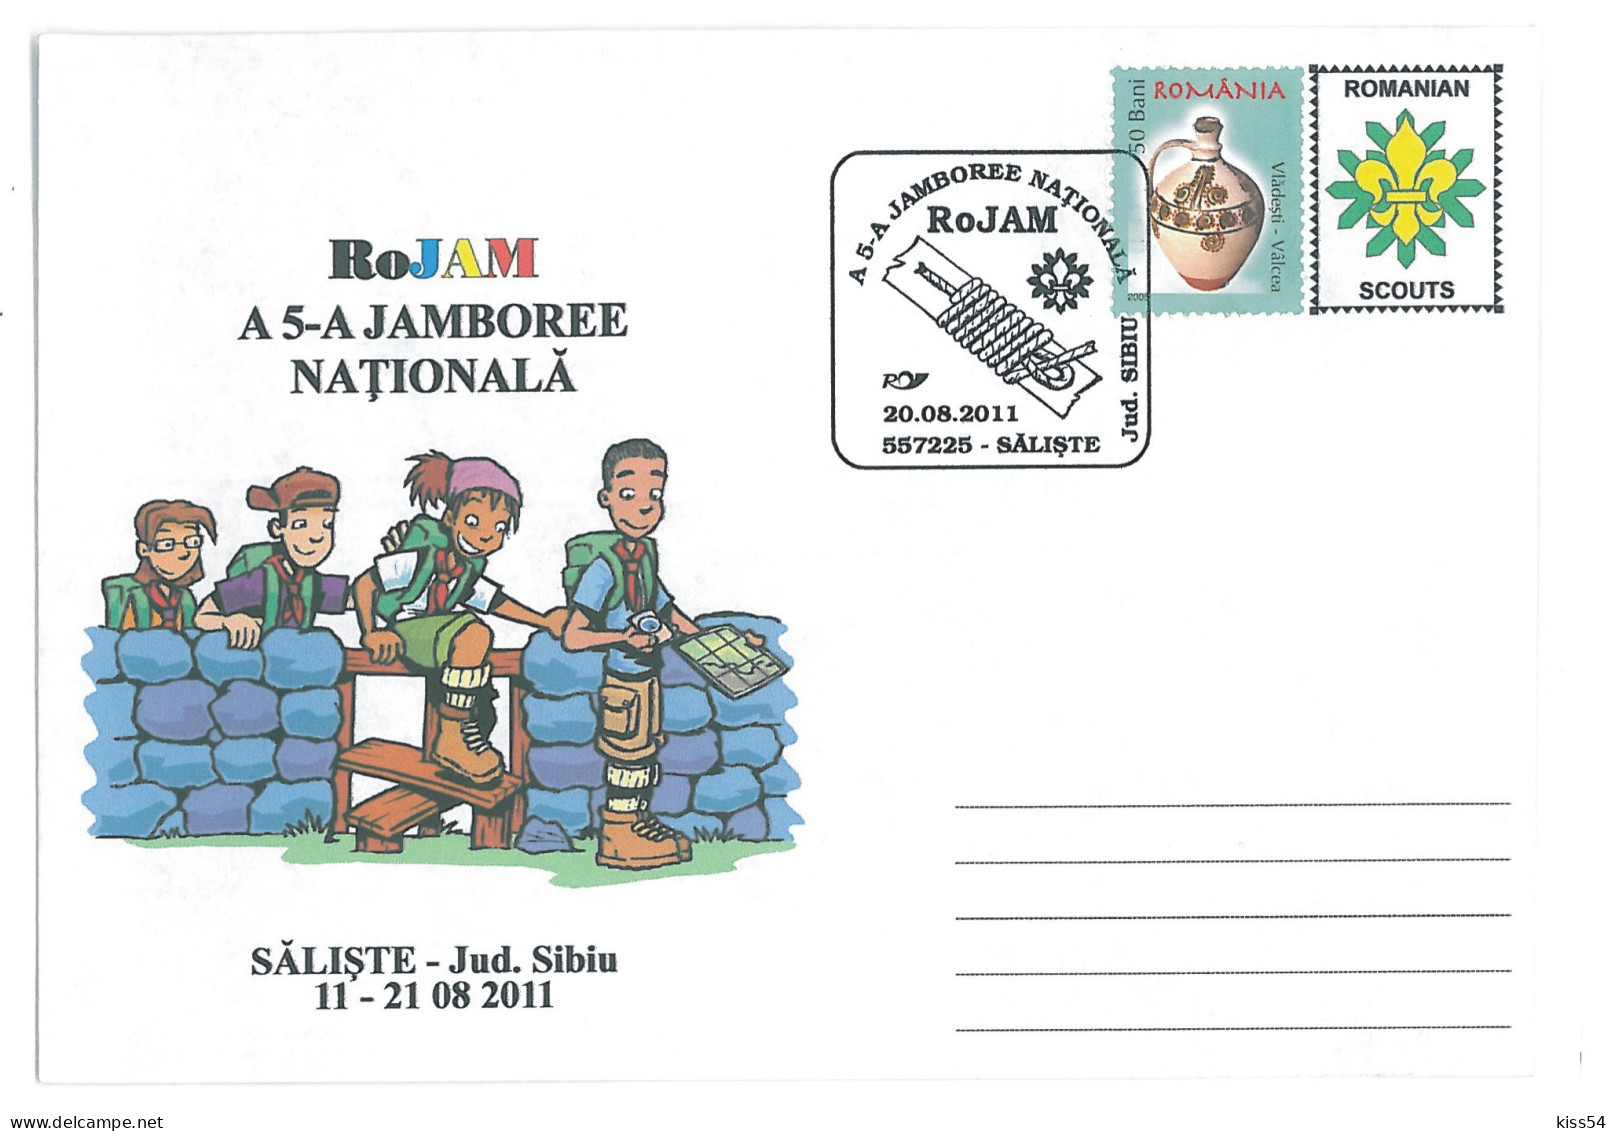 SC 61 - 1305 Scout ROMANIA, National JAMBOREE - Cover - Used - 2011 - Storia Postale